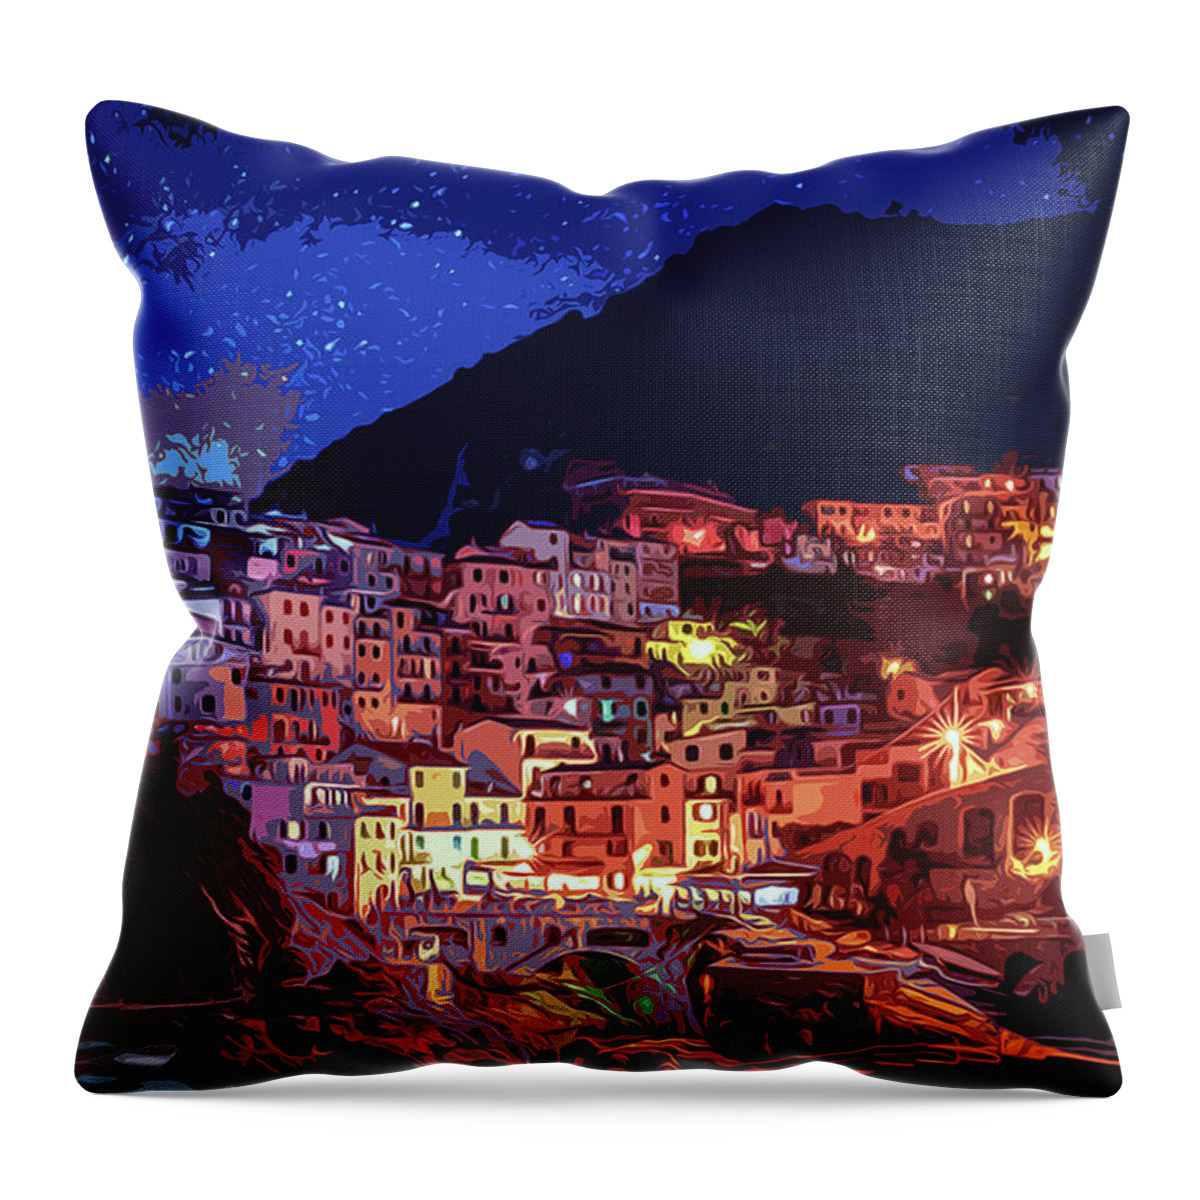 Manarola Italy Throw Pillow featuring the painting Italy, Manarola at night #1 by AM FineArtPrints